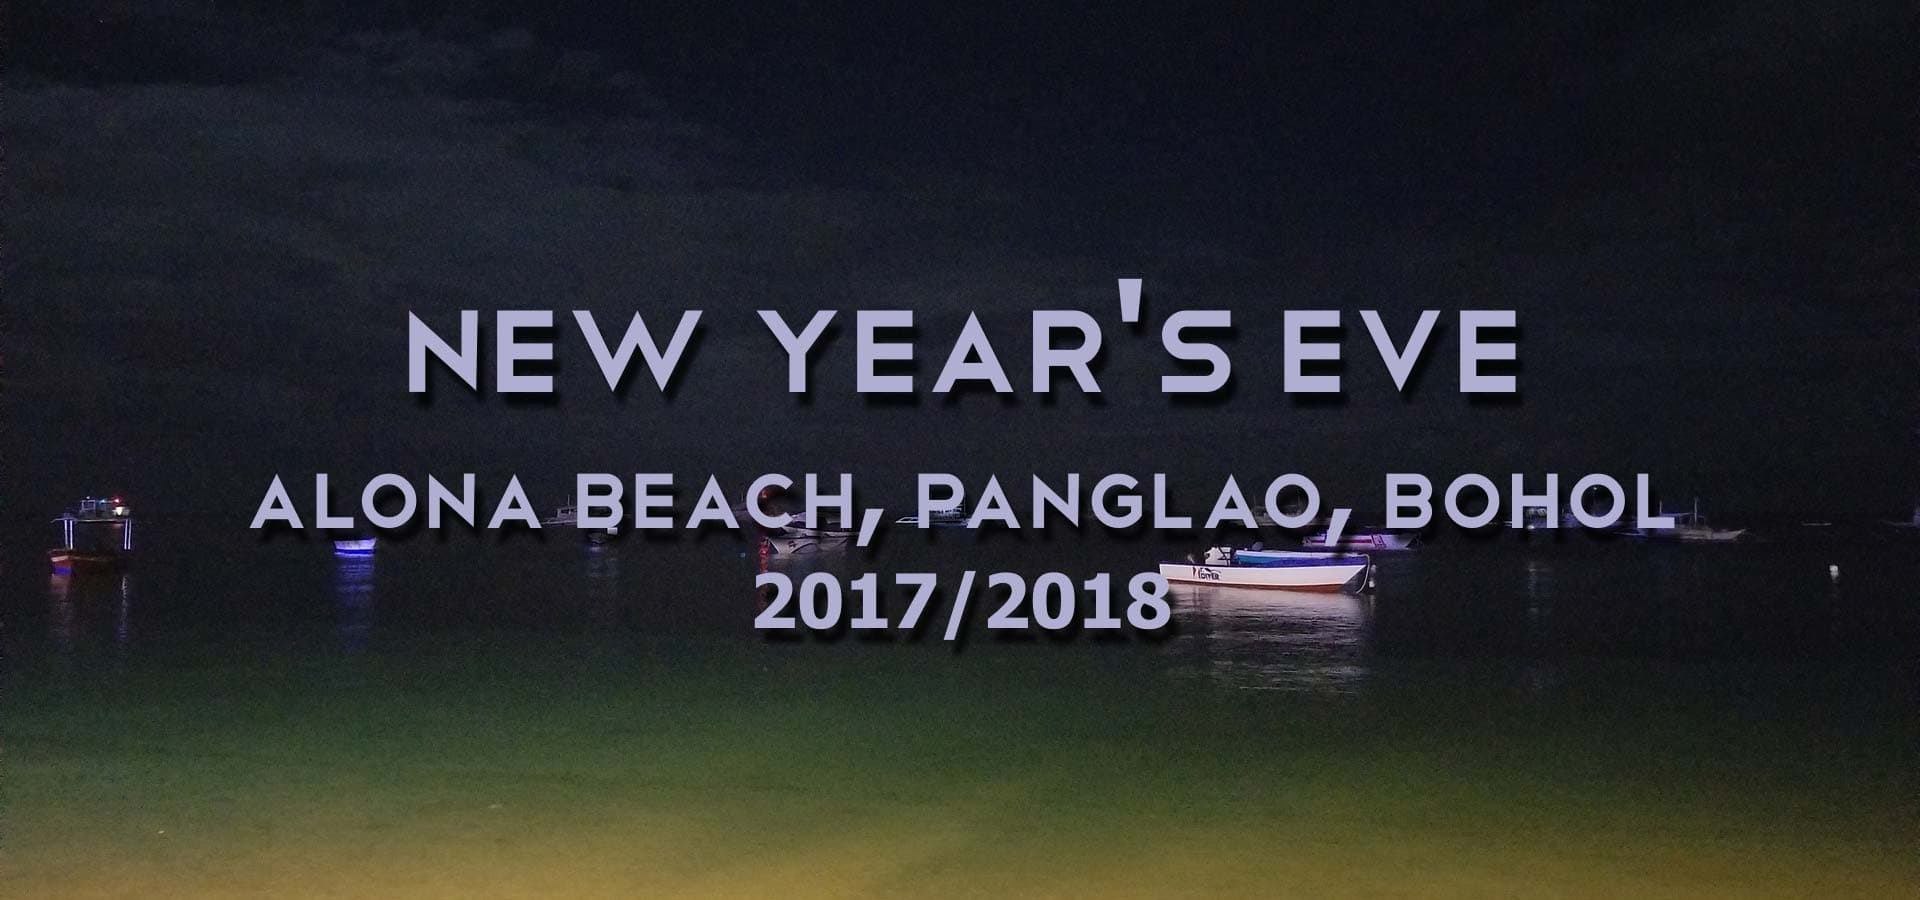 New Year's Eve 2017/2018 Alona Beach - My Philippines Adventures